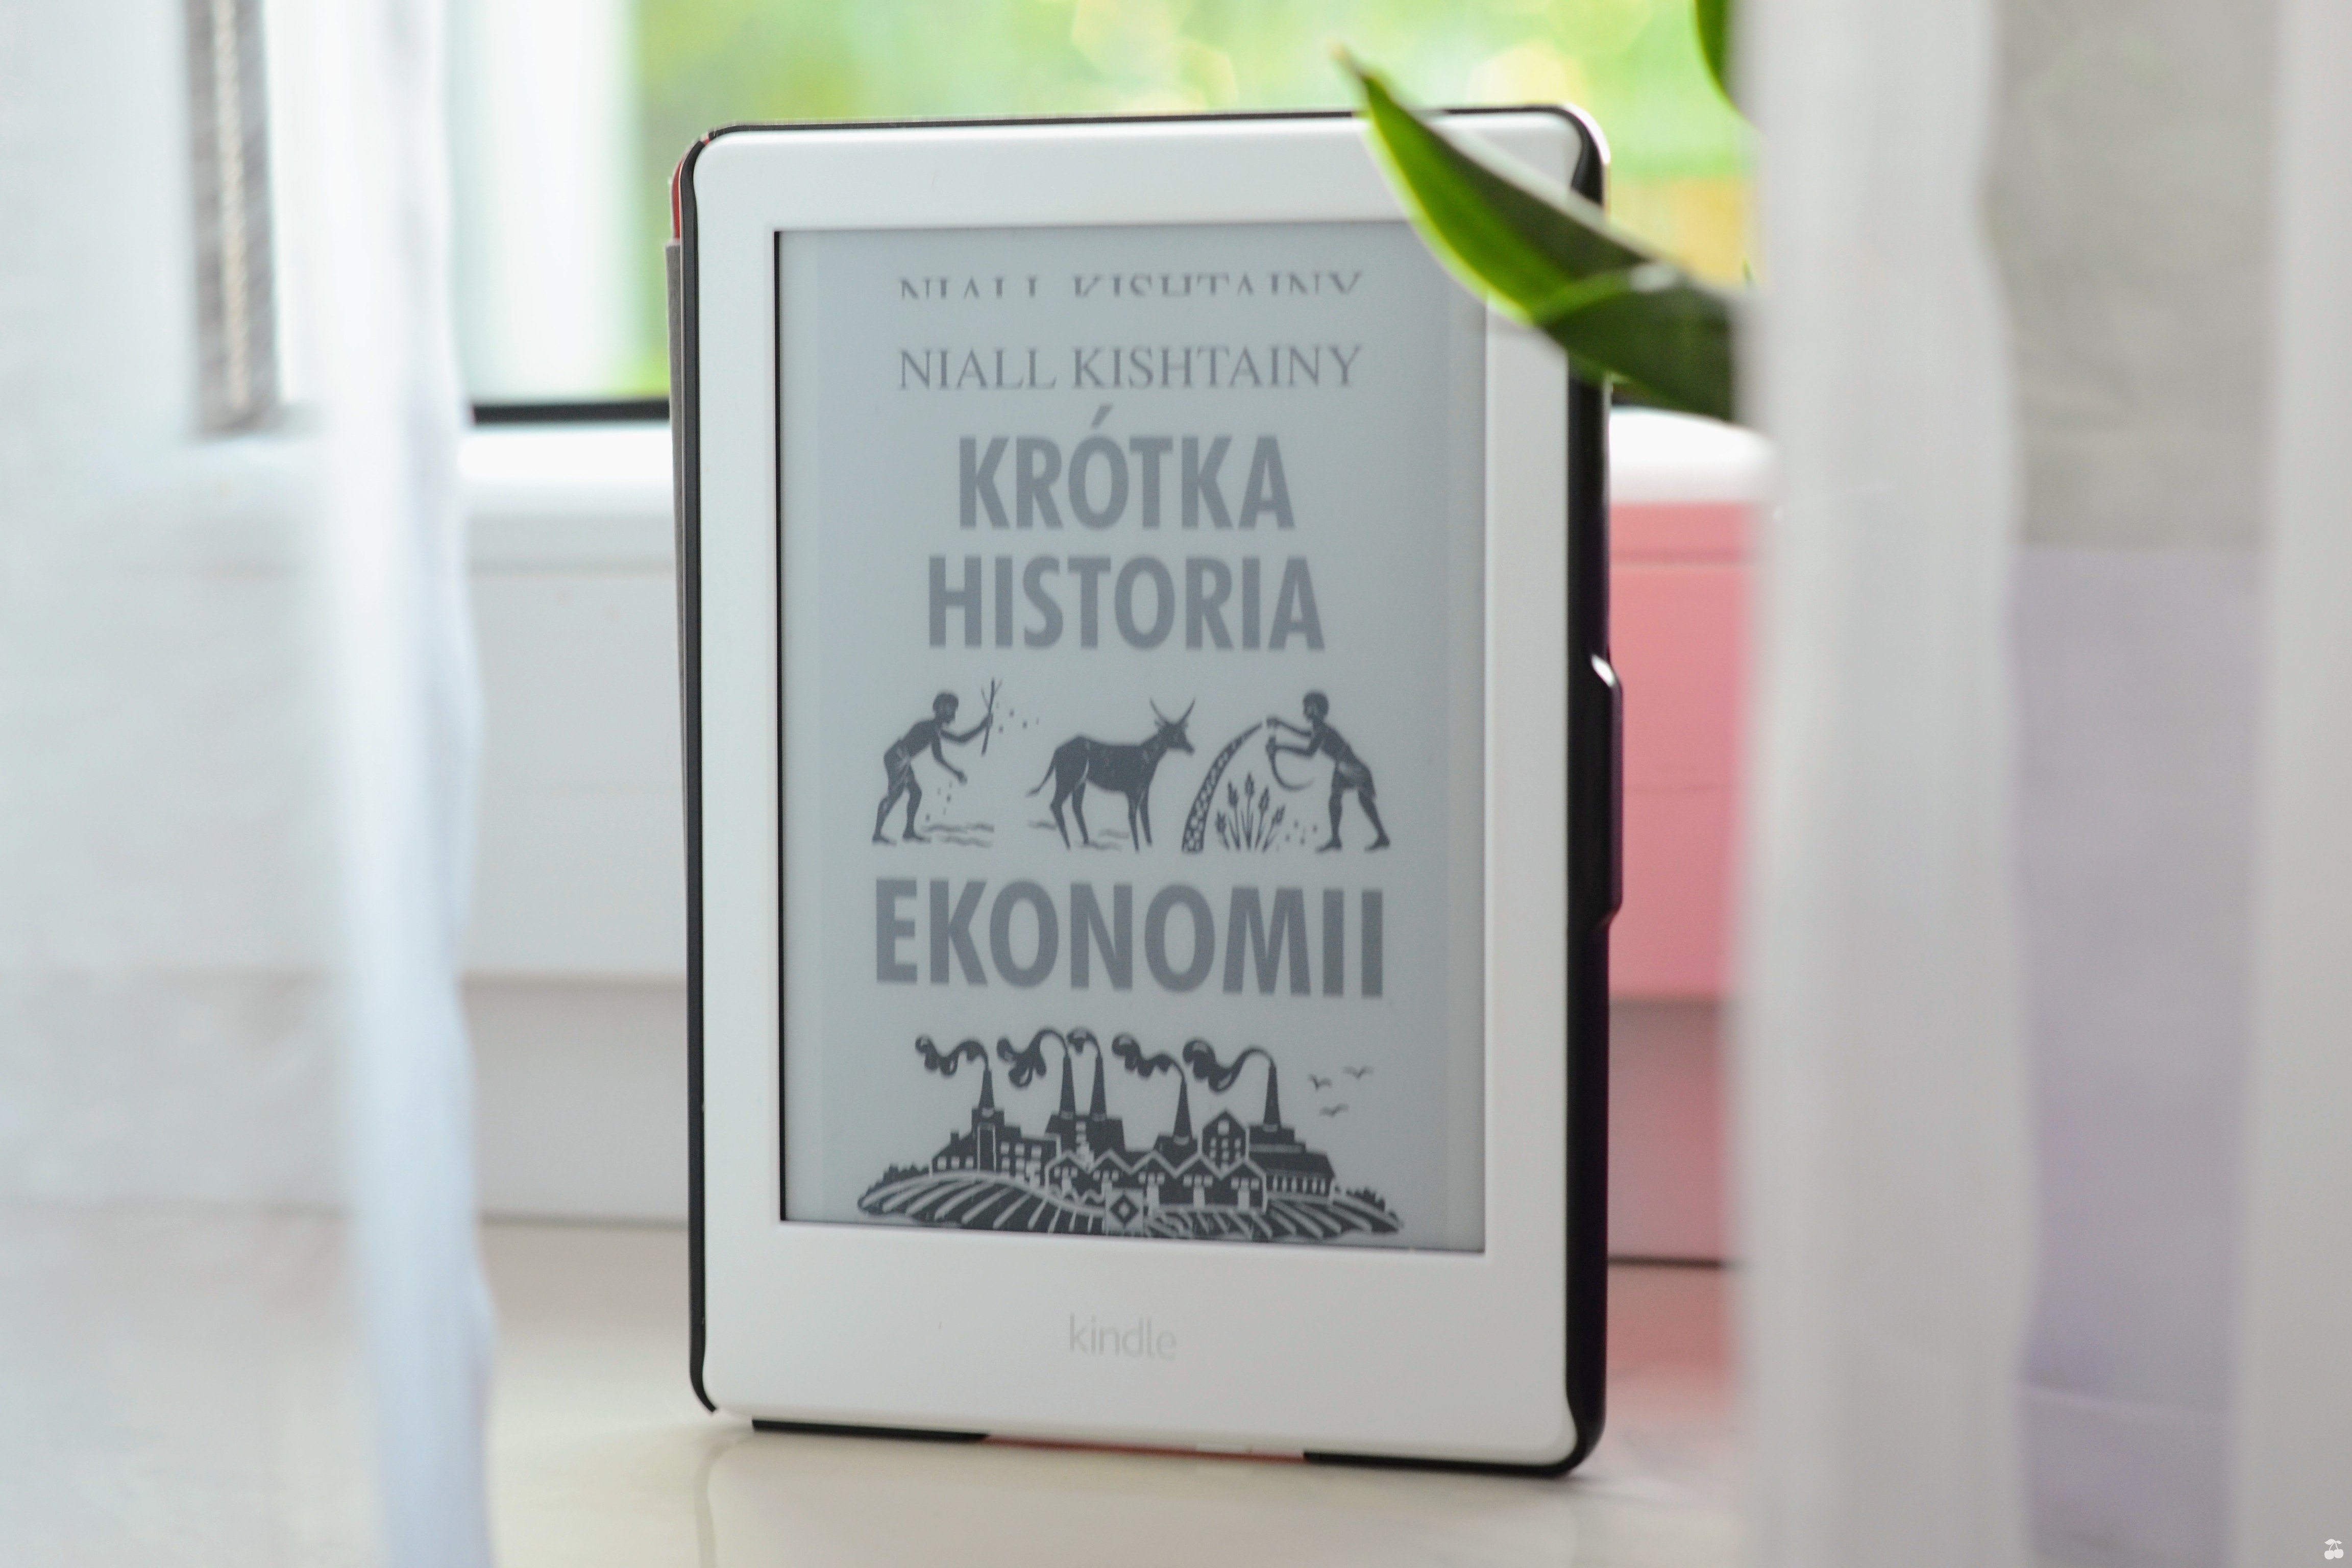 Niall Kishtainy: Krótka historia ekonomii